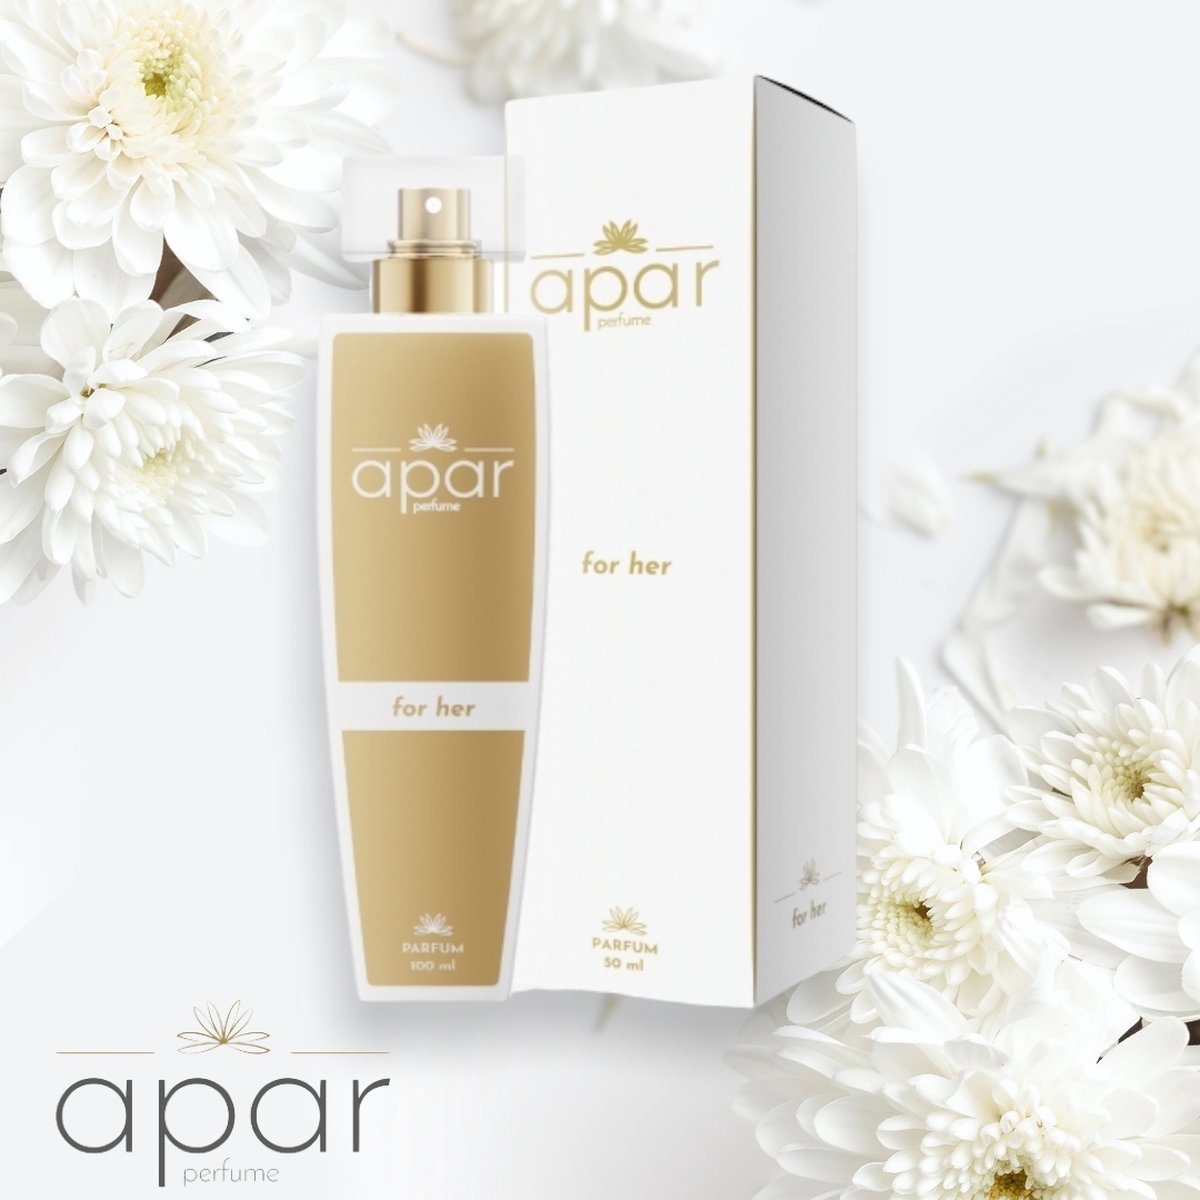 *F105* Bloemige merkgeur voor dames APAR Parfum EDP - 50ml - Nummer F105 Premium - Cadeau Tip !